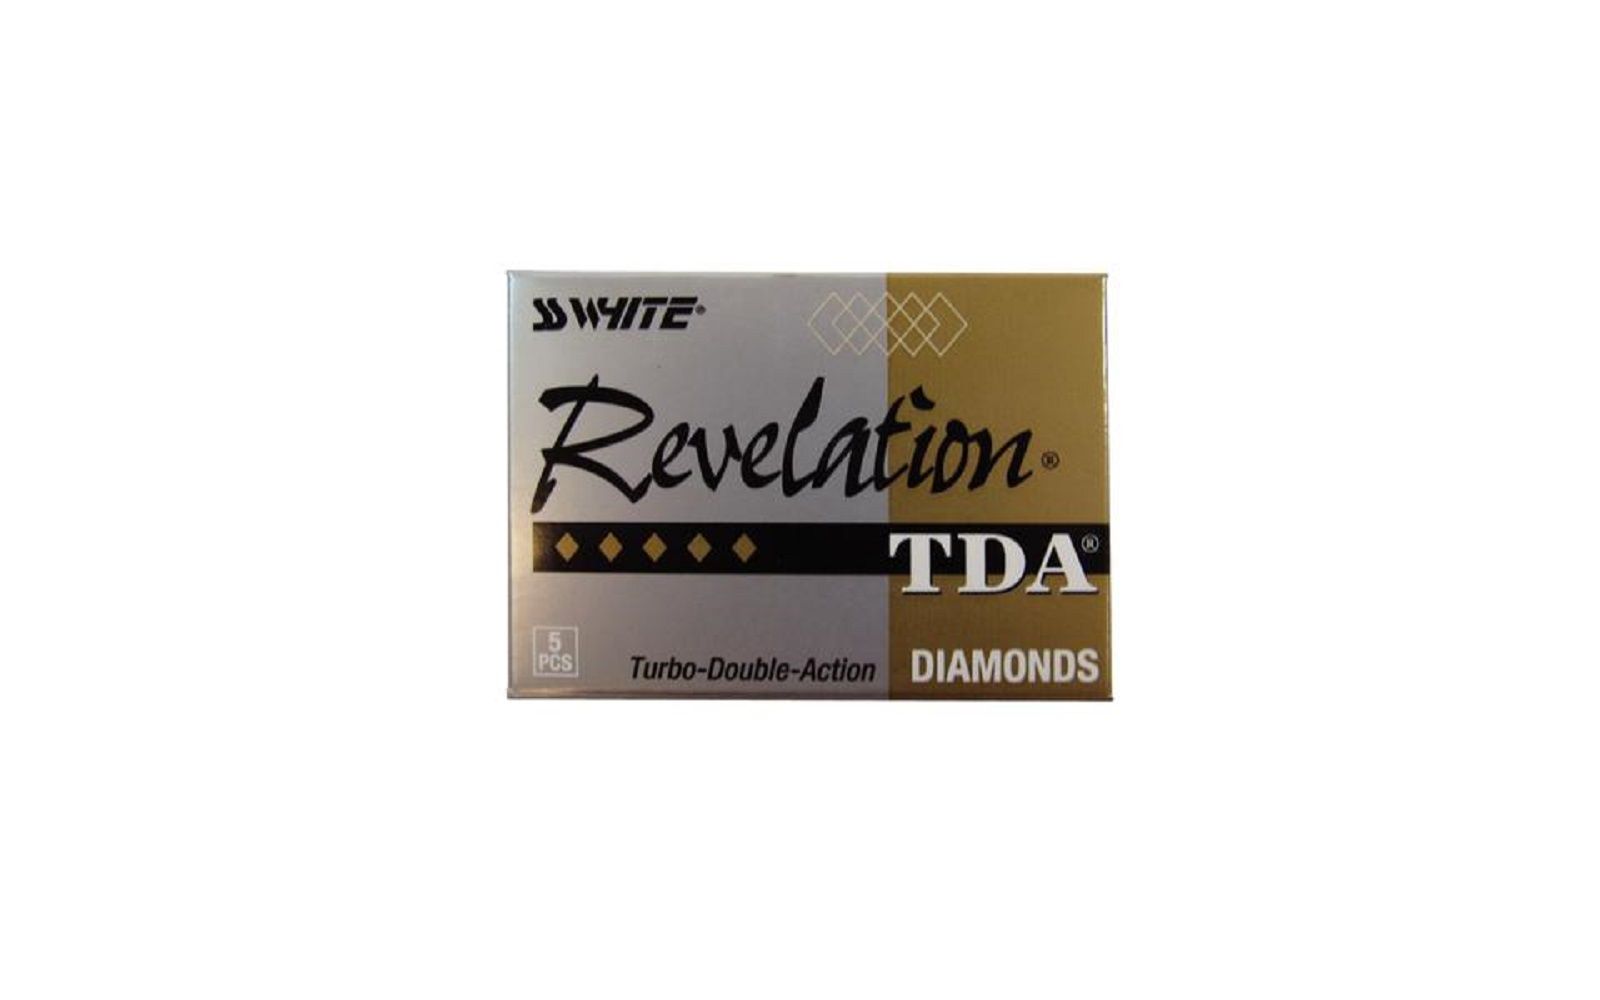 Tda diamonds – cylinder point end, medium grit, fg, 5/pkg - size #879-018-m, 1. 8 mm diameter